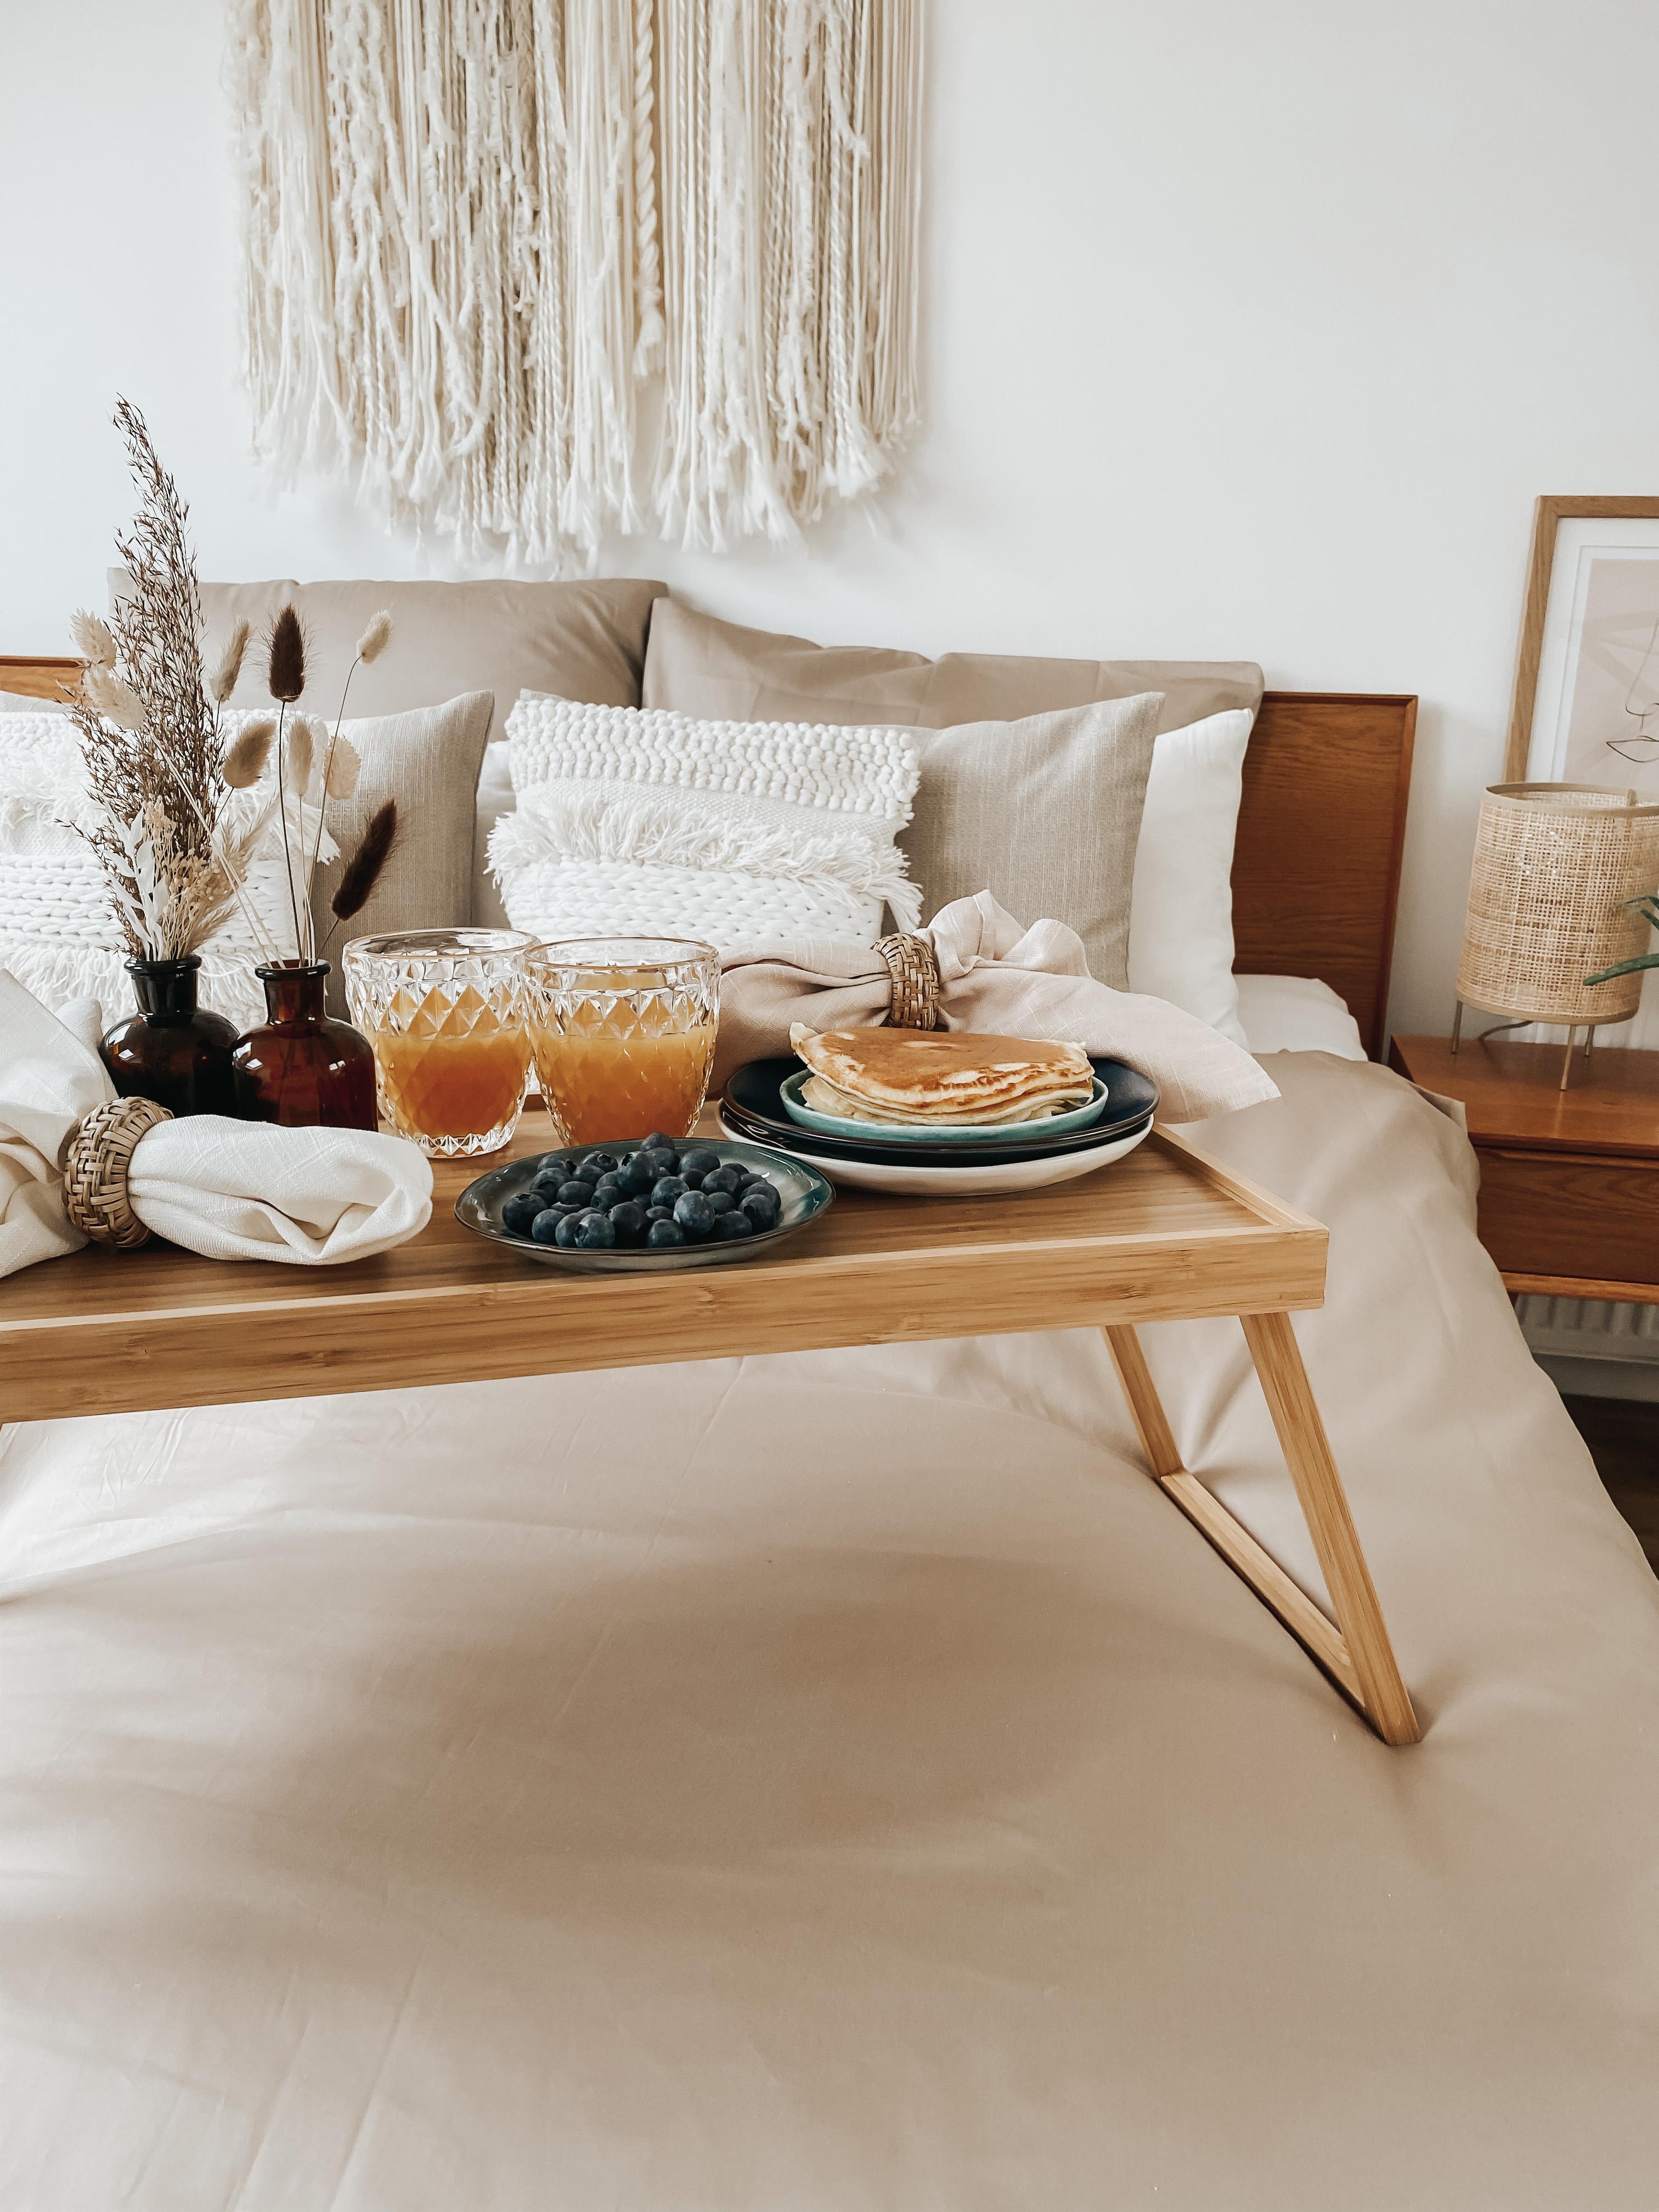 Start your day right 🤍
#frühstückimbett #bett #bedroom #bedroominspo #schlafzimmer #breakfast #details #bohohome 